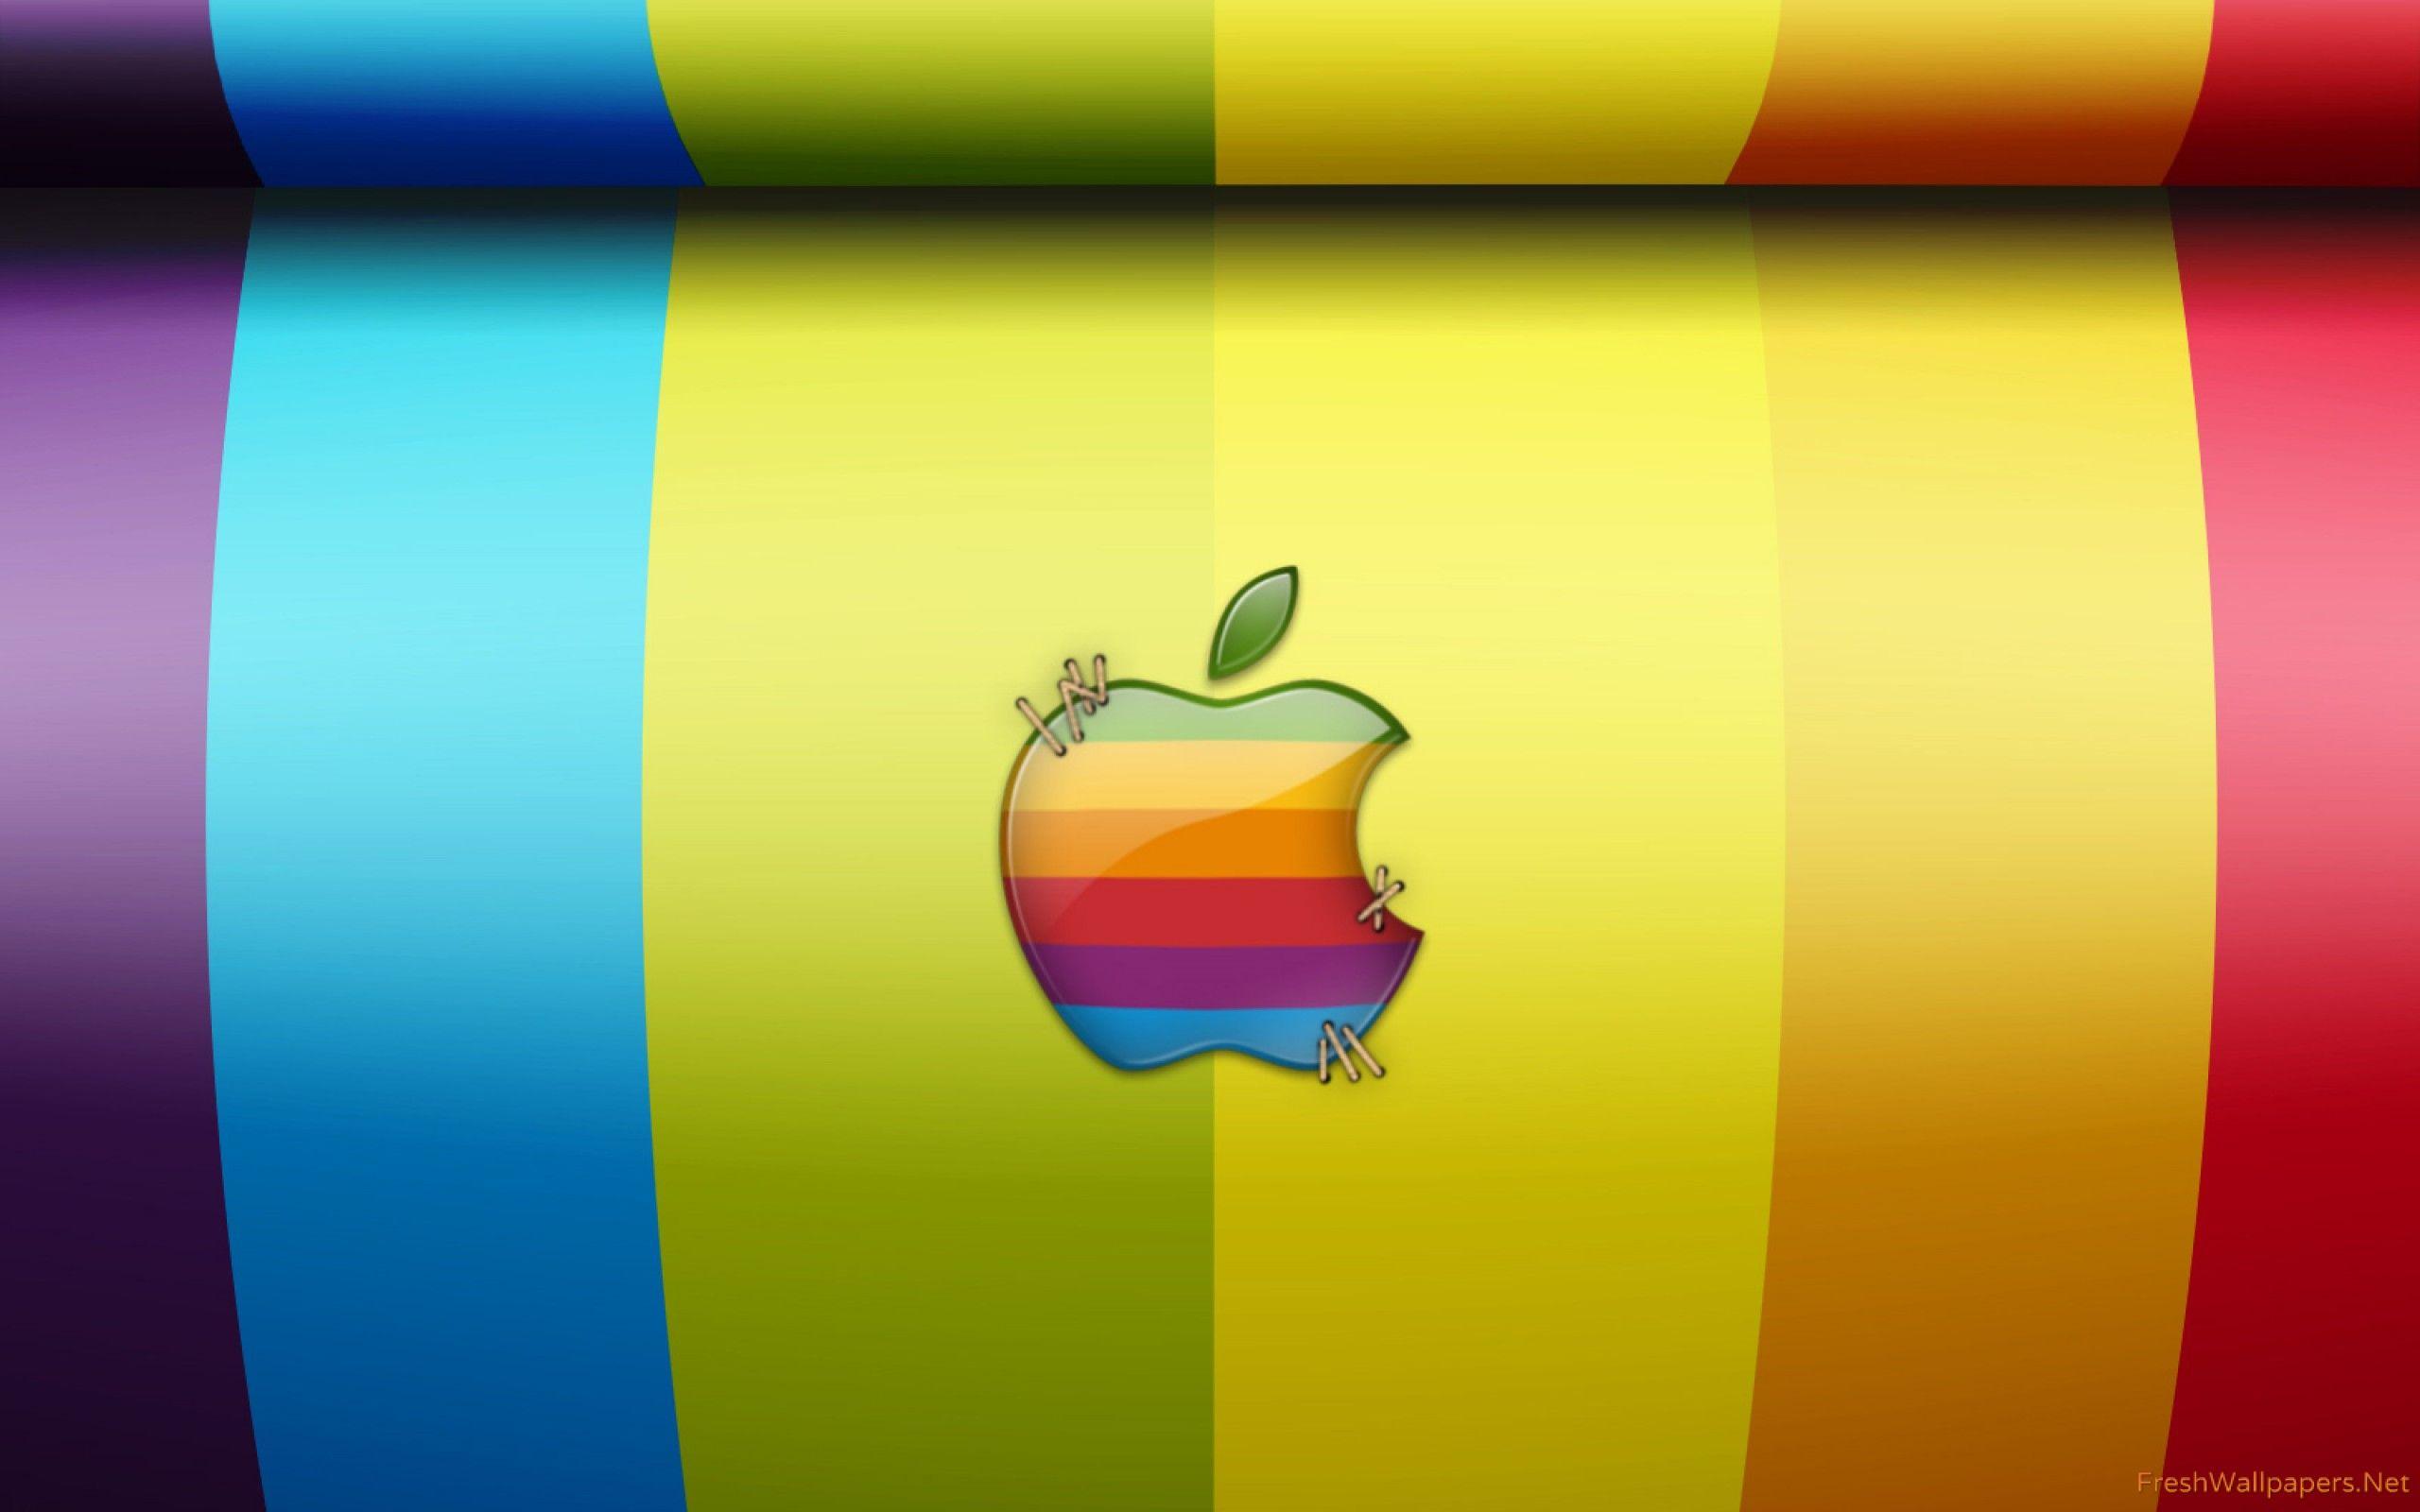 Apple logo with rainbow wallpaper